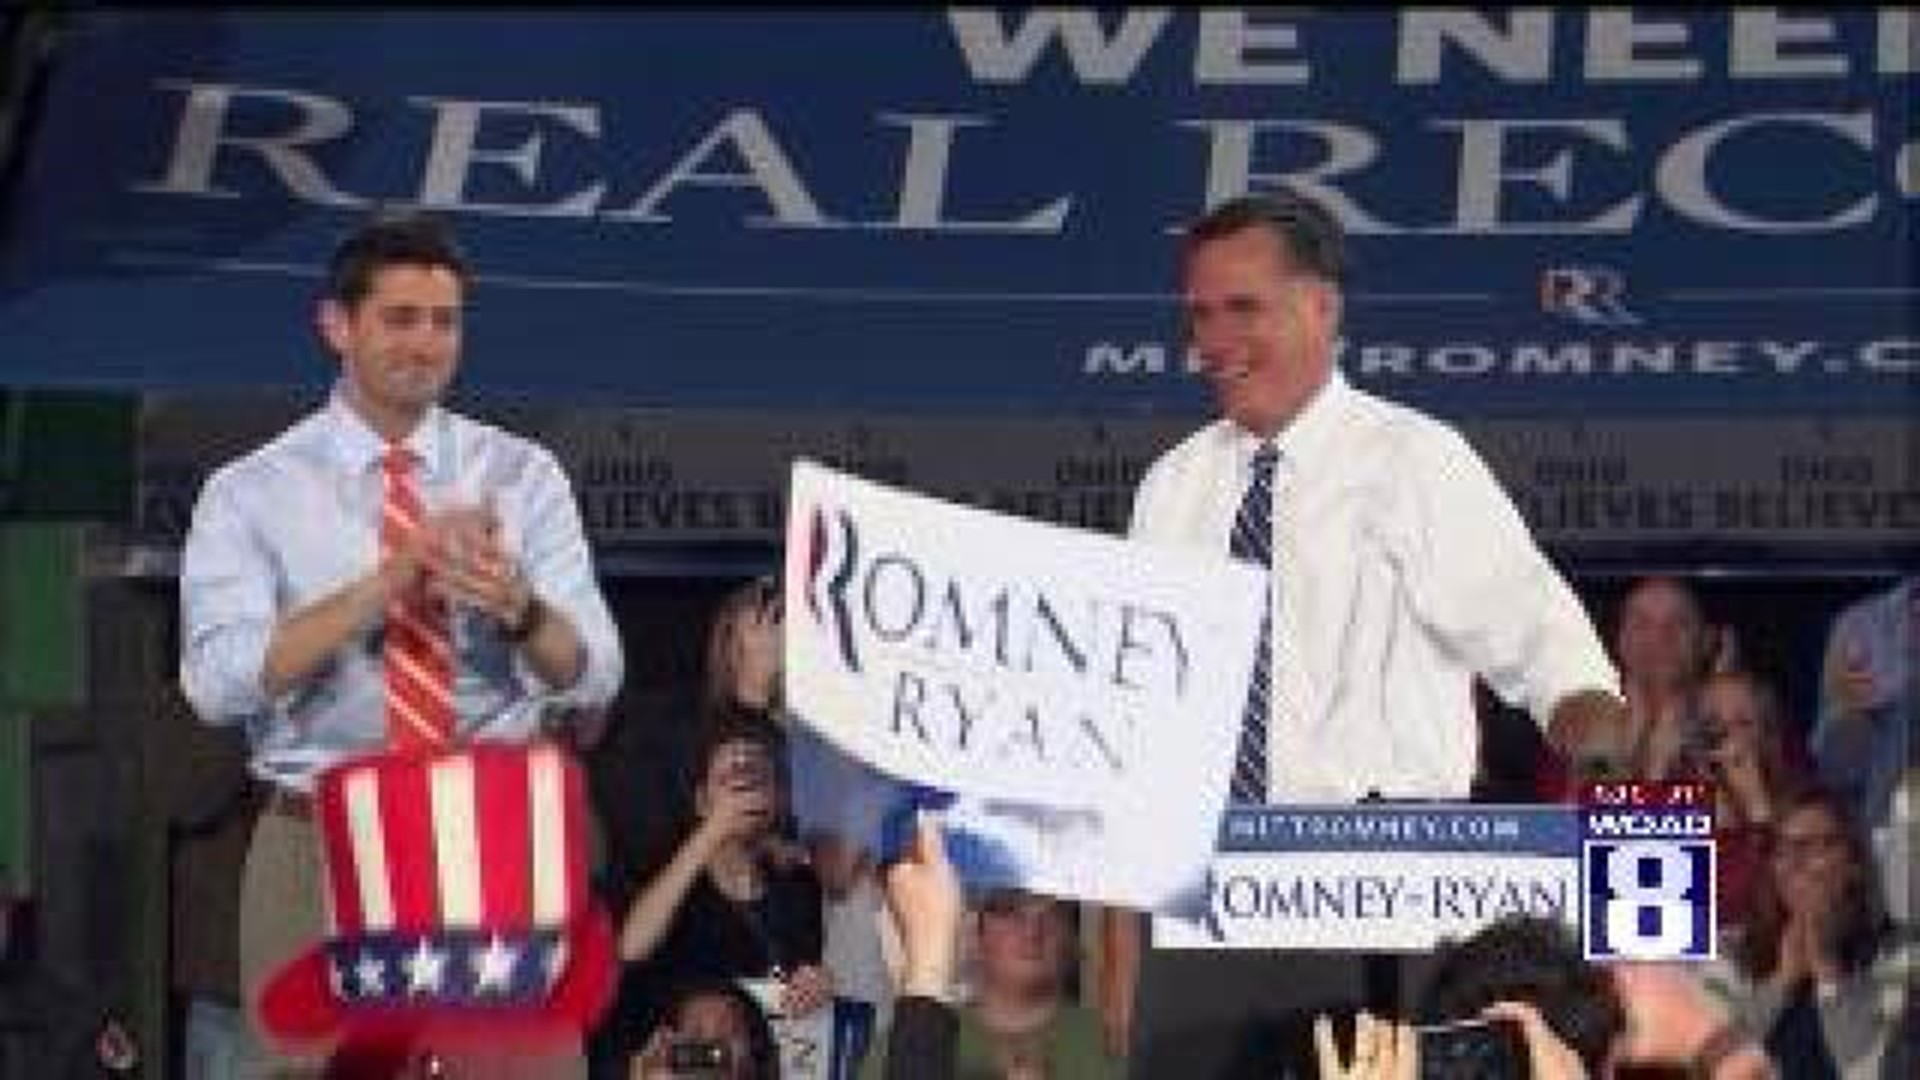 Romney Visits Iowa After Receiving Major Endorsements